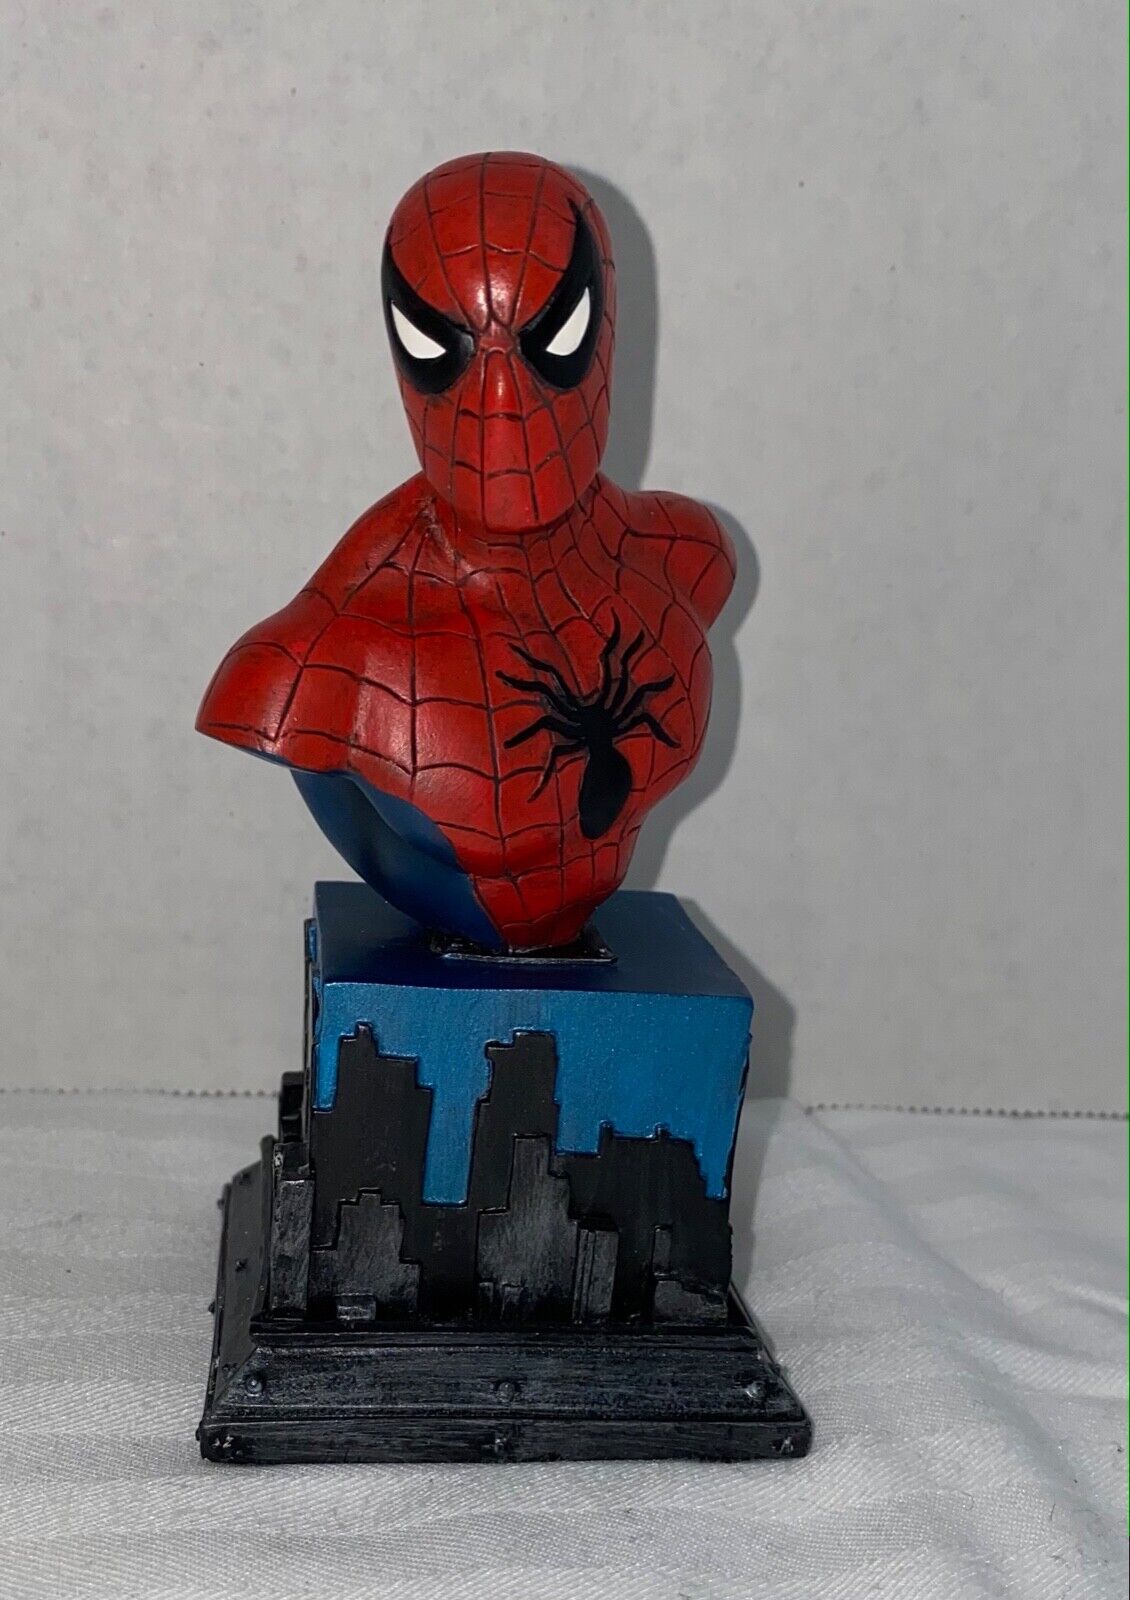 Spider-Man Mini-Bust. Marvel. Bowen Designs. #152/12,000. Very Good Condition.